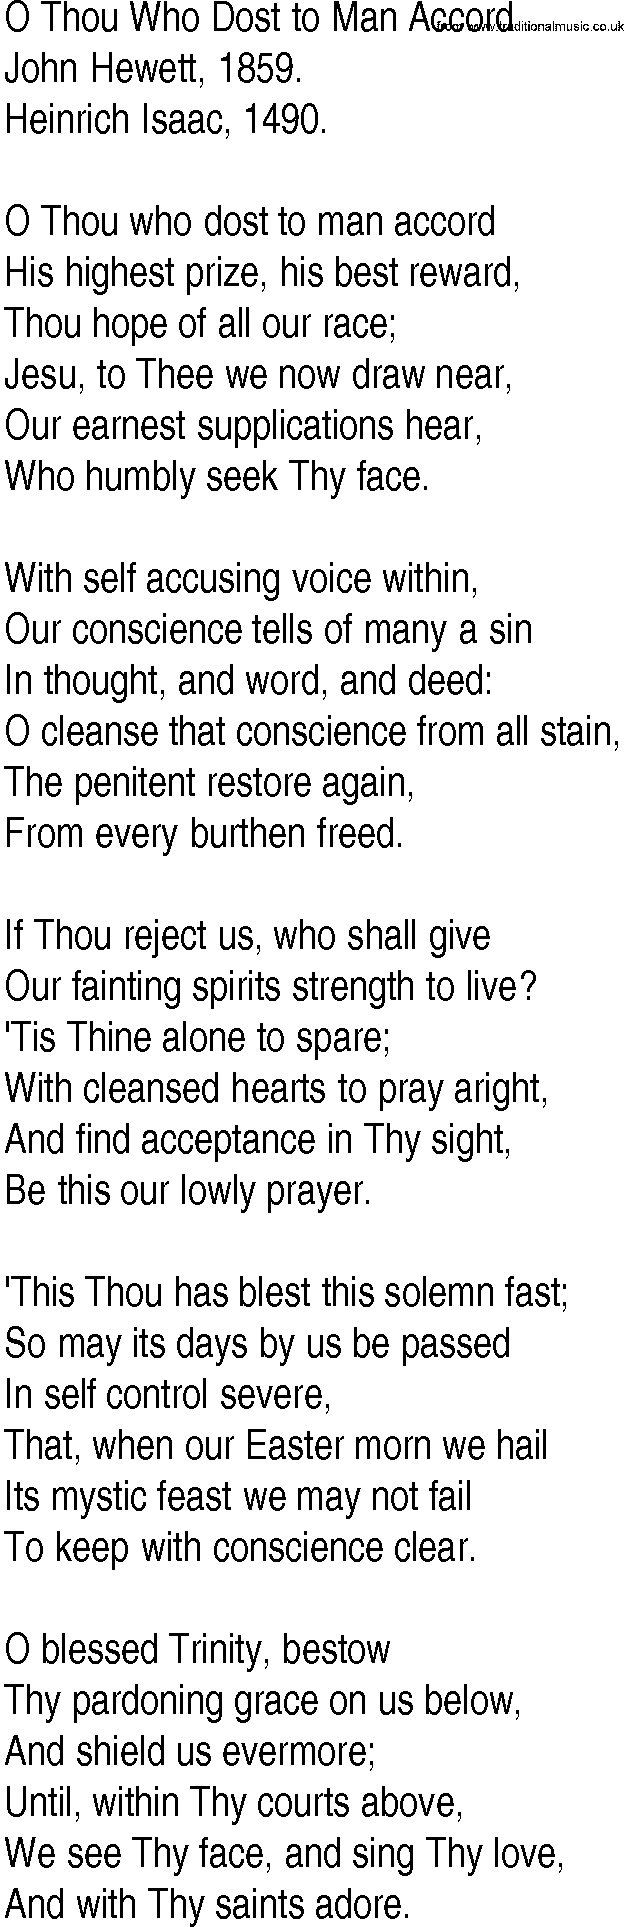 Hymn and Gospel Song: O Thou Who Dost to Man Accord by John Hewett lyrics